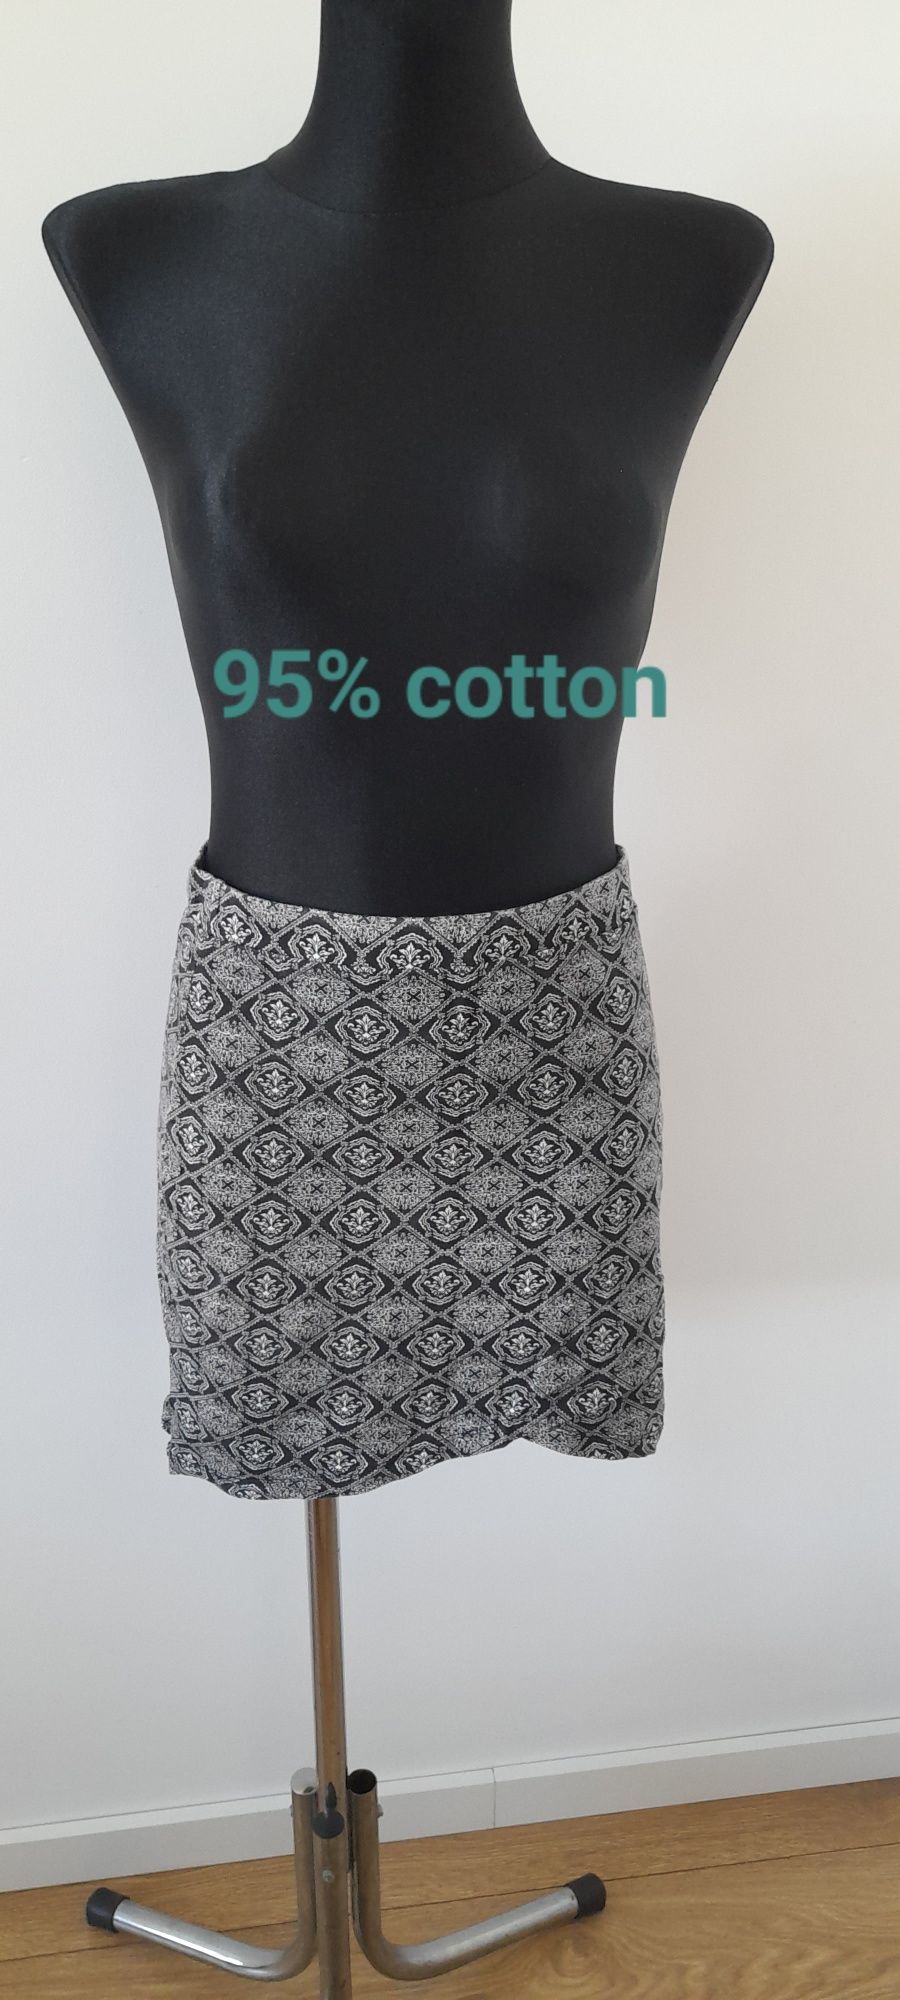 Krótka spódnica Pepco M 95% cotton